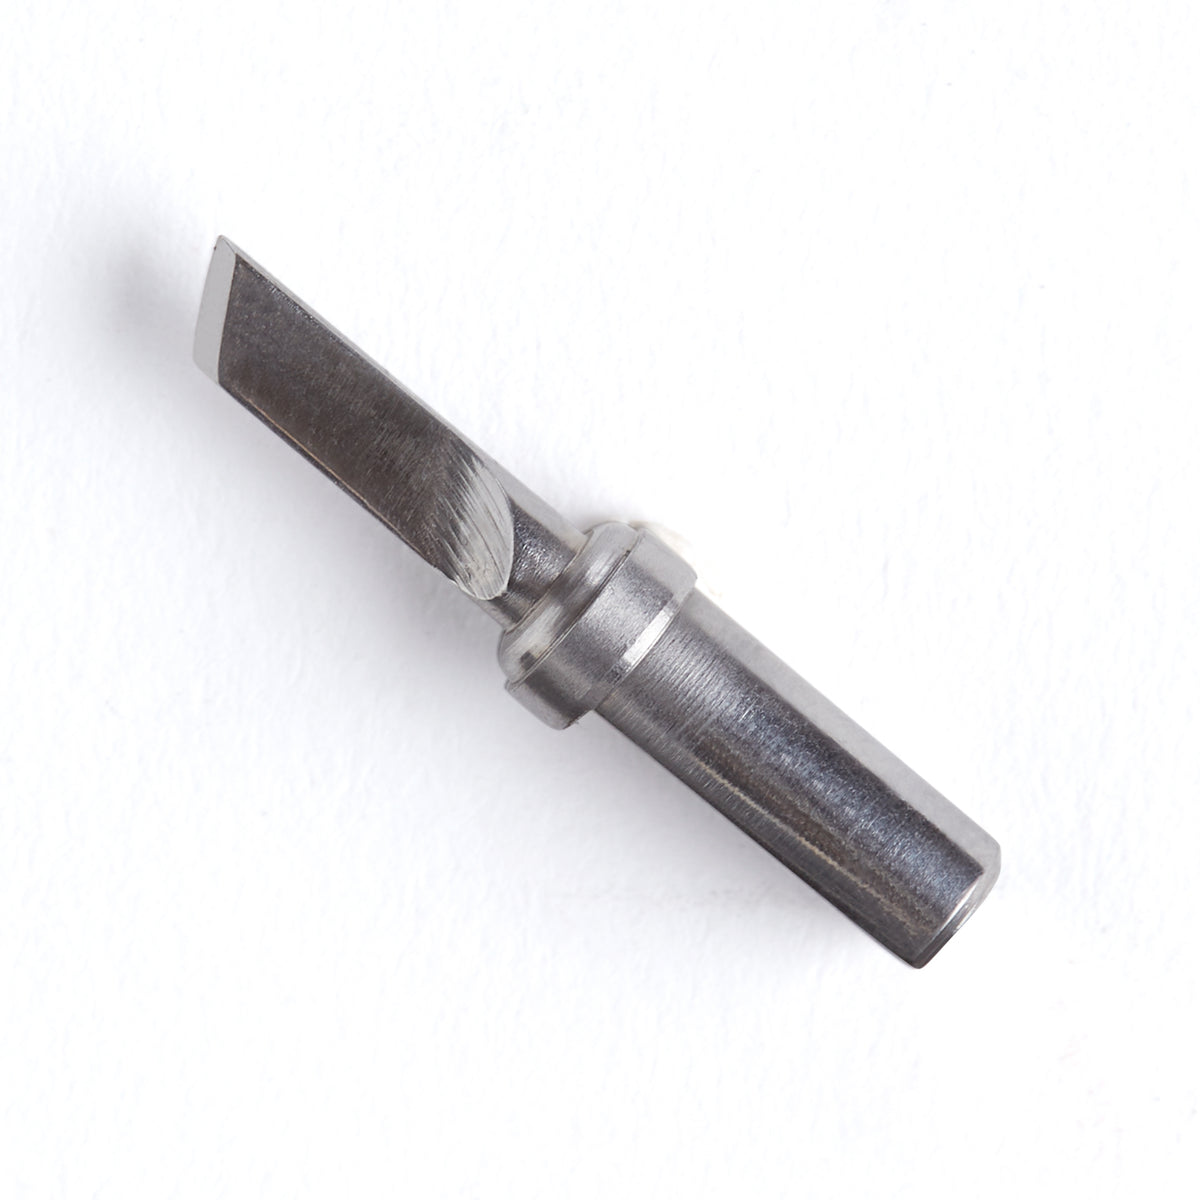 Craftool® Precision Craft Knife Set — Tandy Leather International